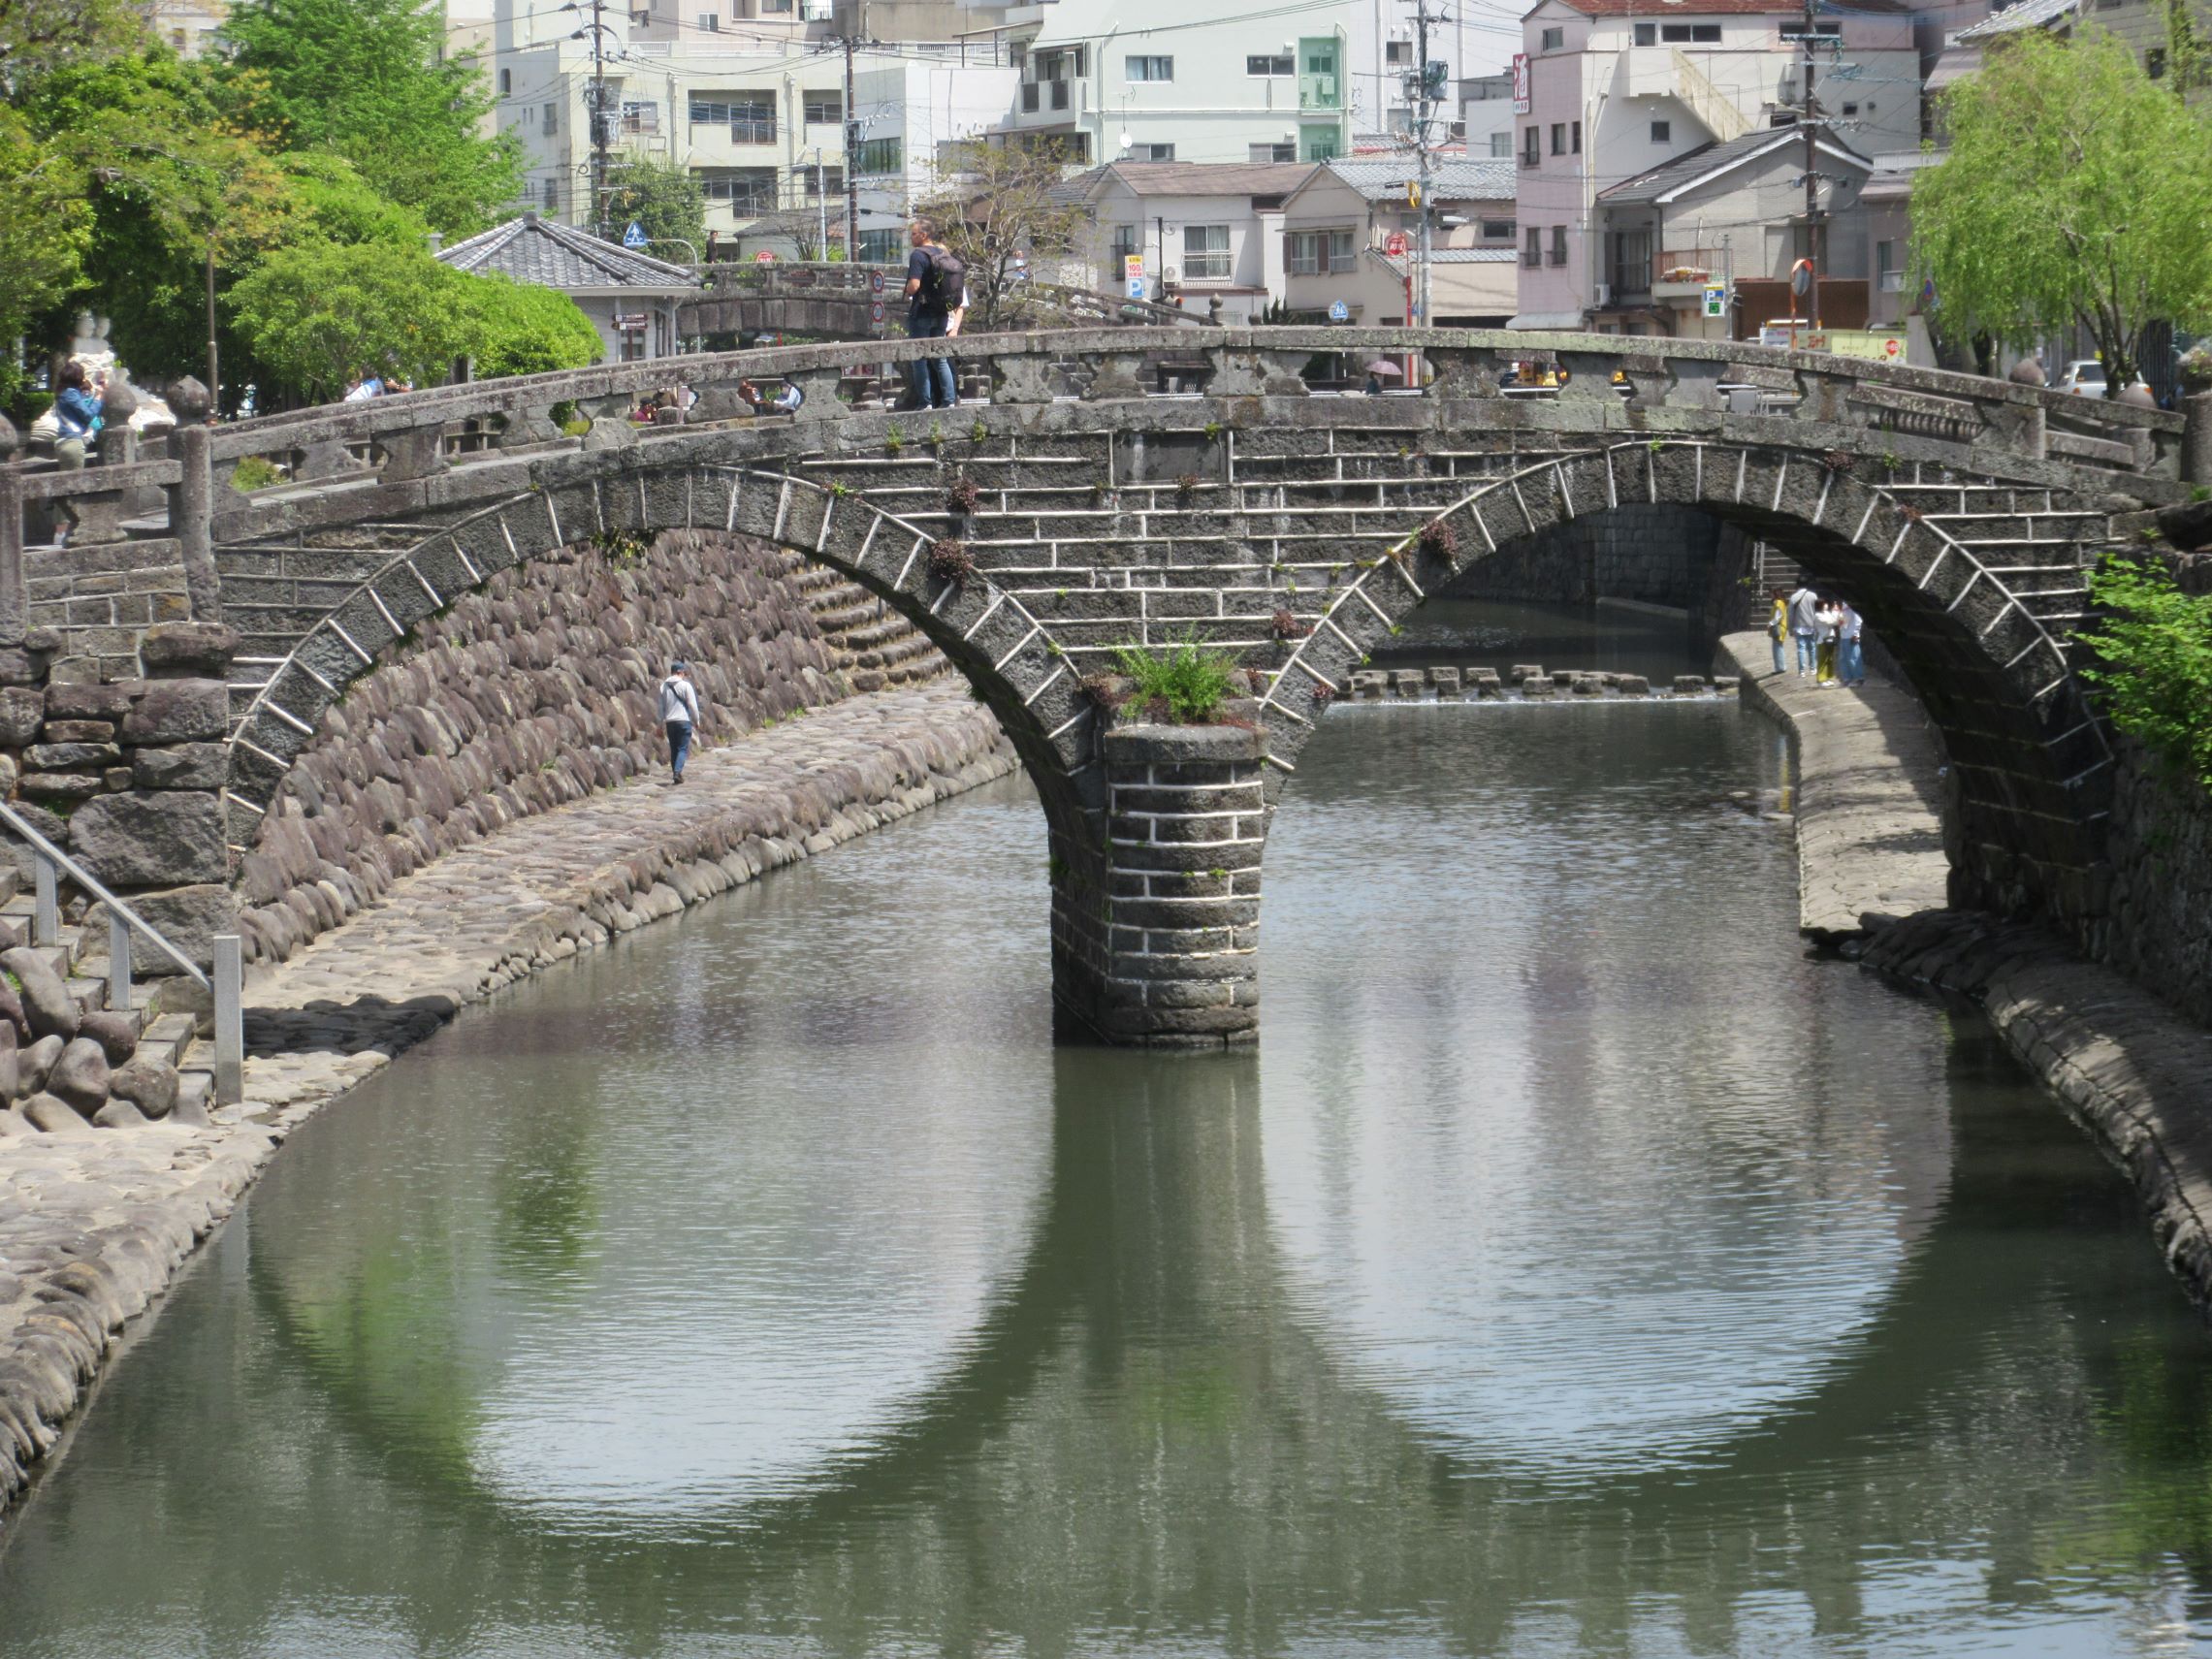 Meganebashi(Spectacle Bridge), one of the most famous bridges in Nagasaki.